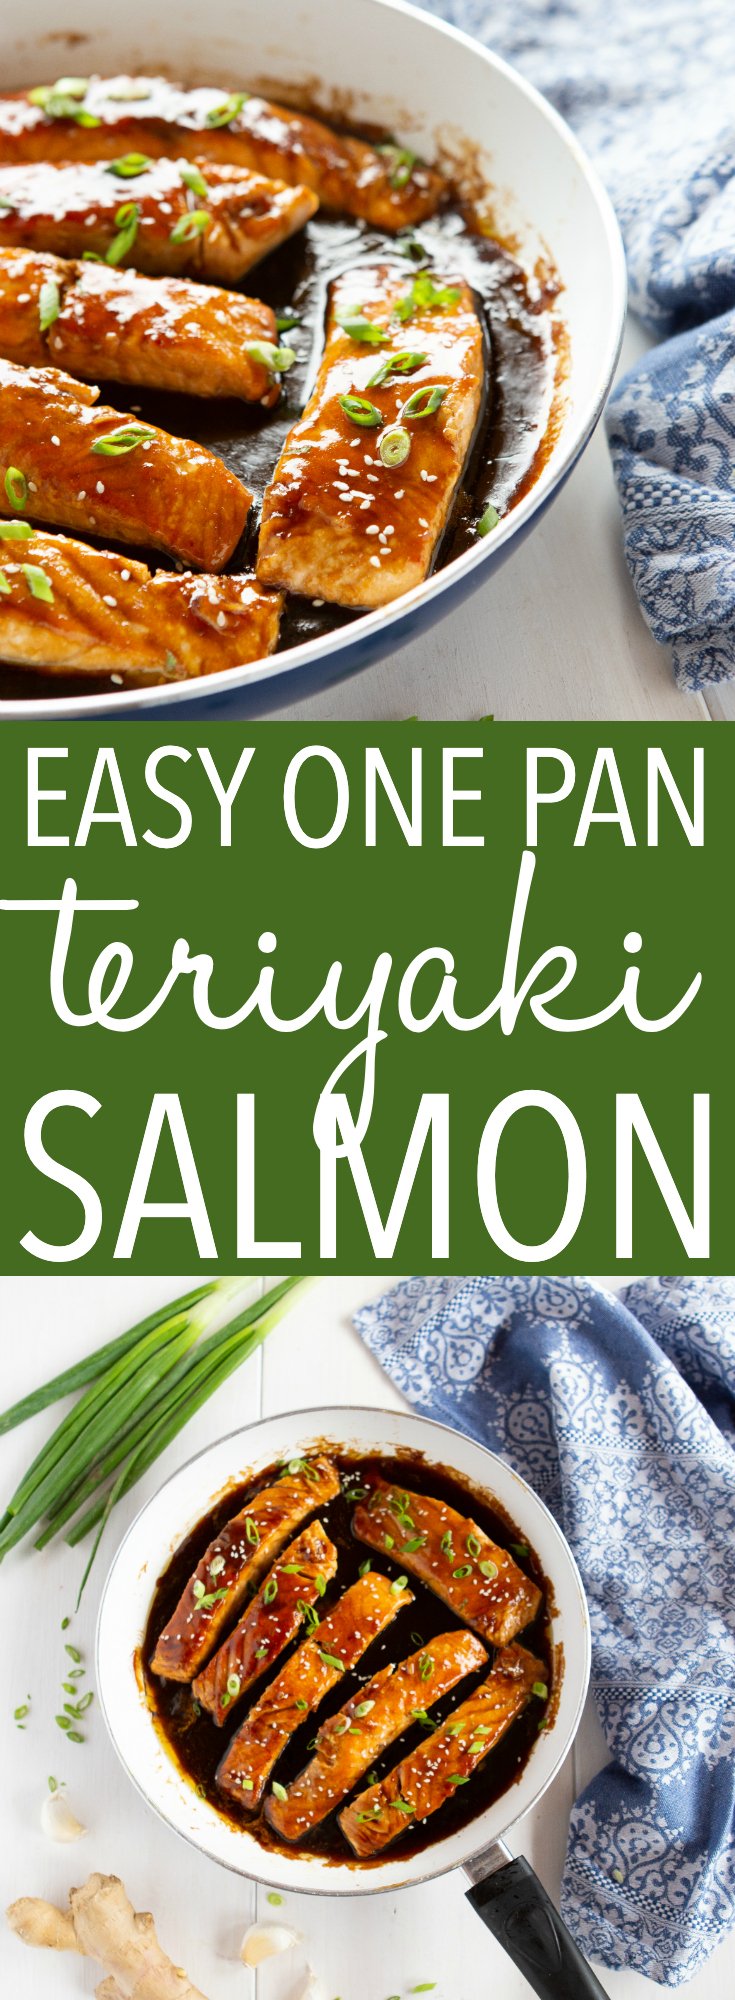 Easy One Pan Teriyaki Salmon Pinterest